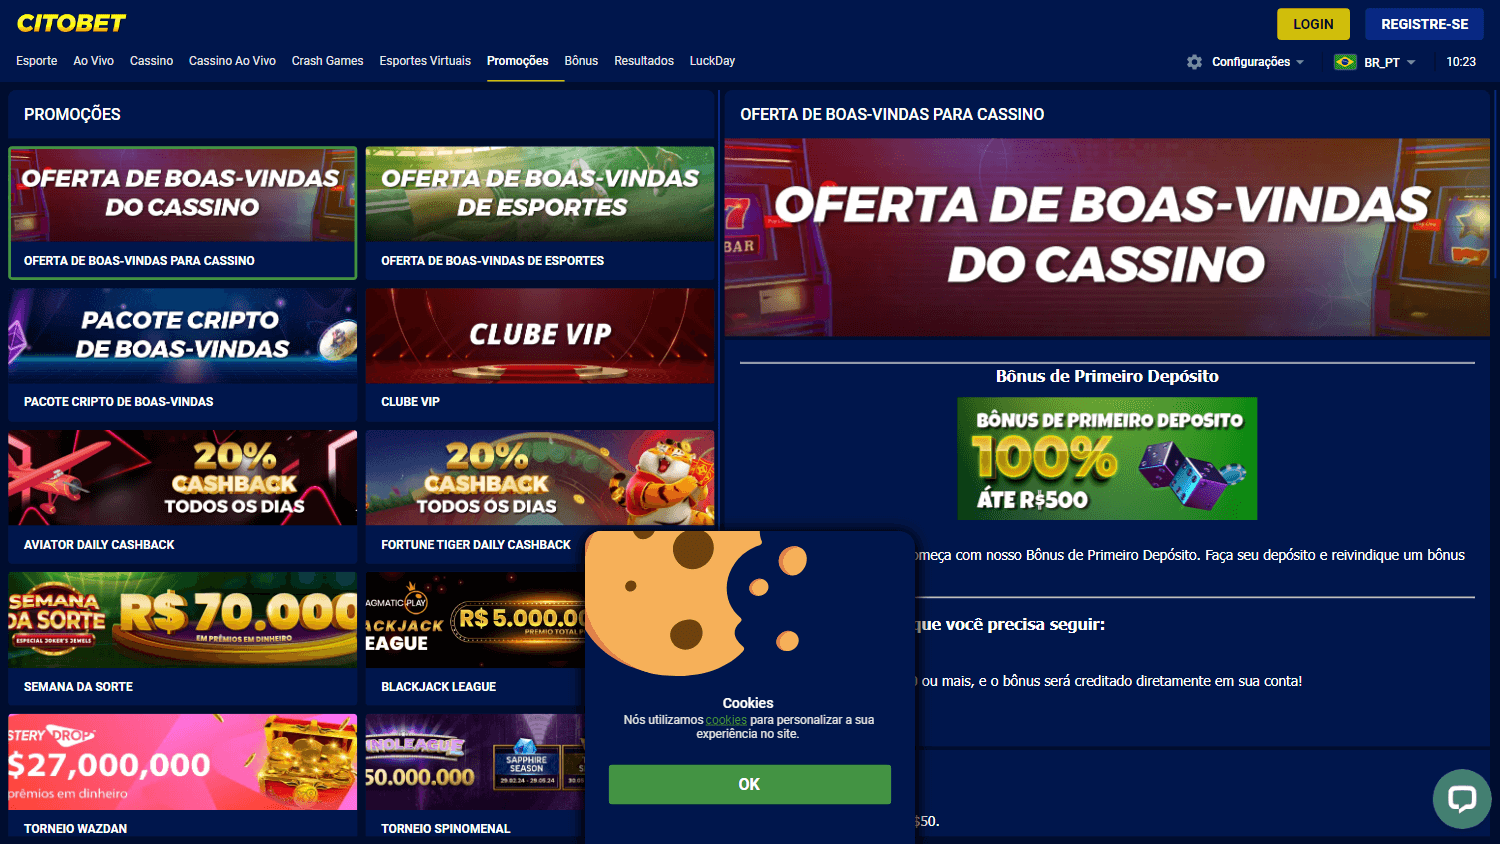 citobet_casino_promotions_desktop